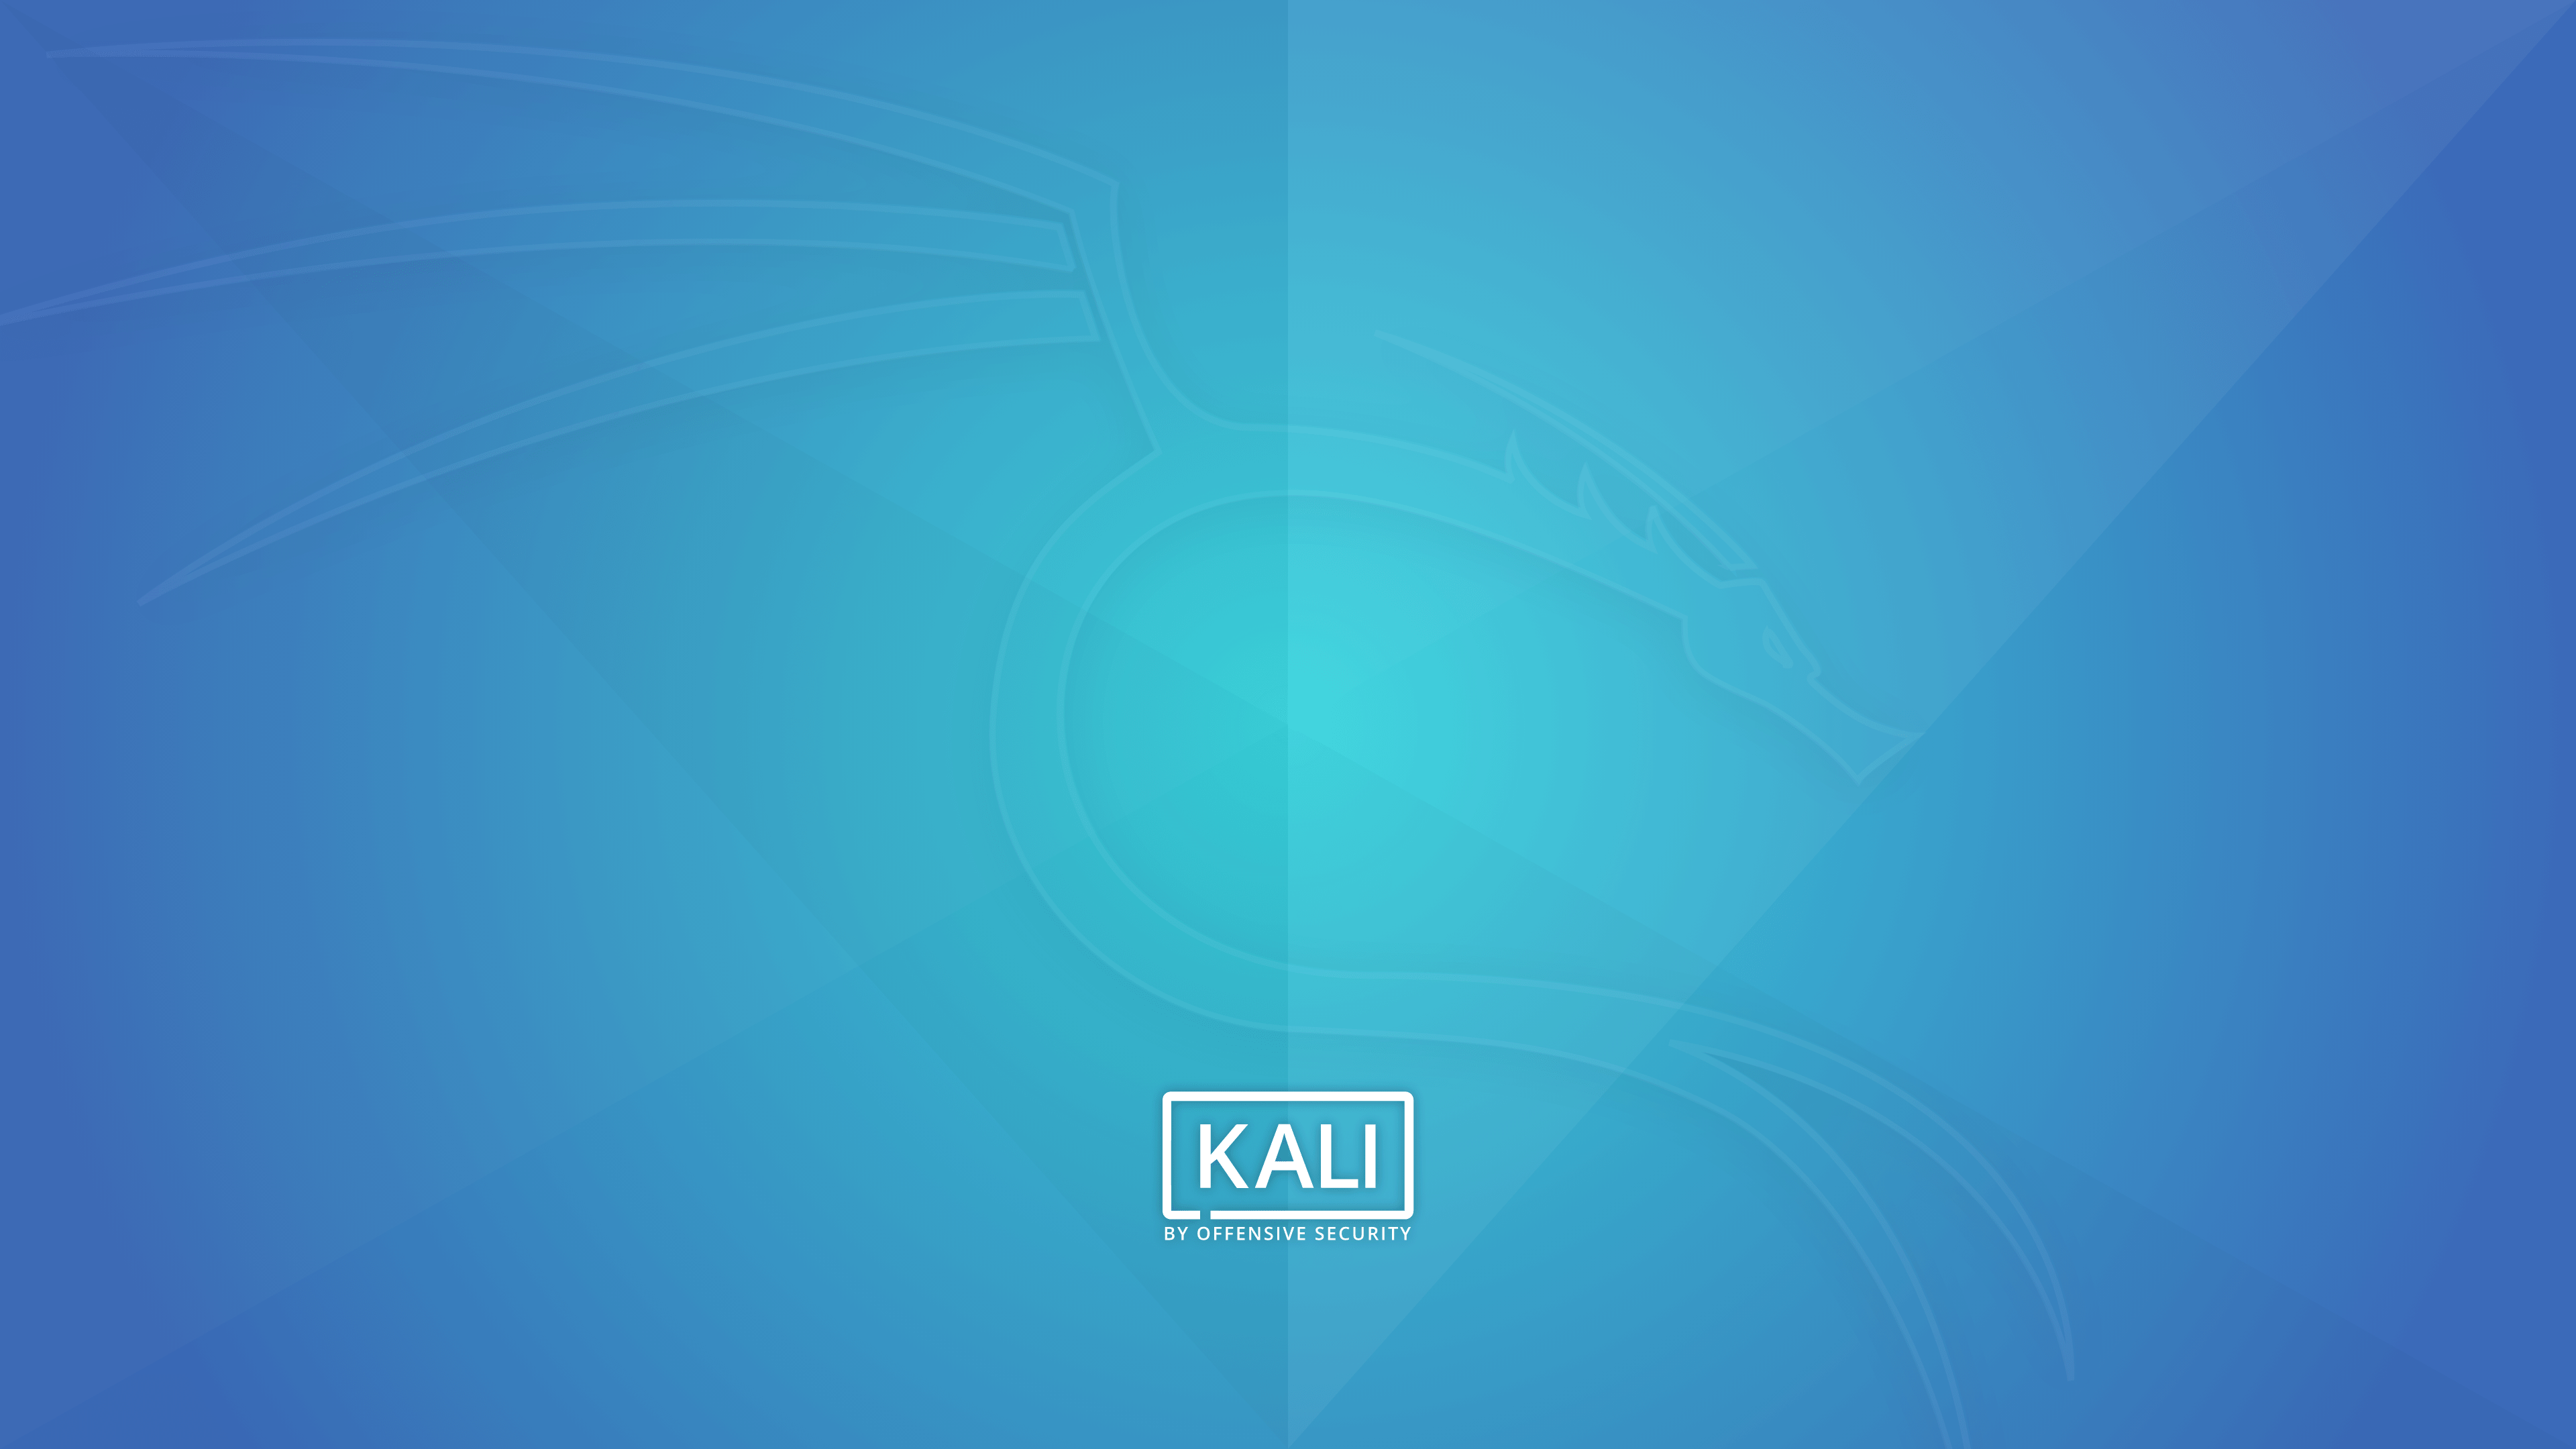 Kali Linux Wallpaper For Tech